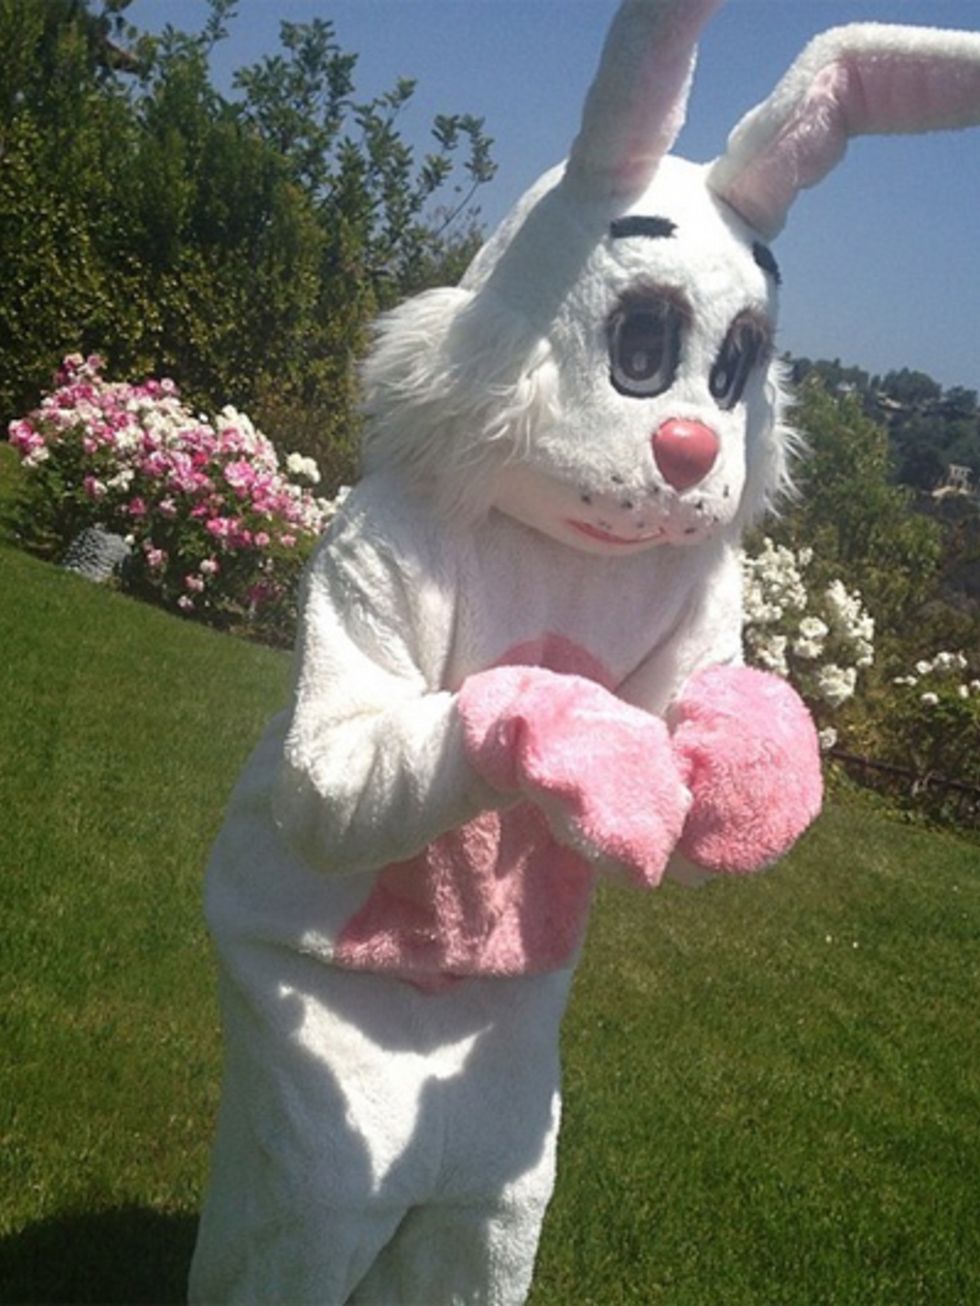 Easter bunny, Pink, Rabbits and Hares, Rabbit, Spring, Toy, Garden, Shrub, Fur, Domestic rabbit, 